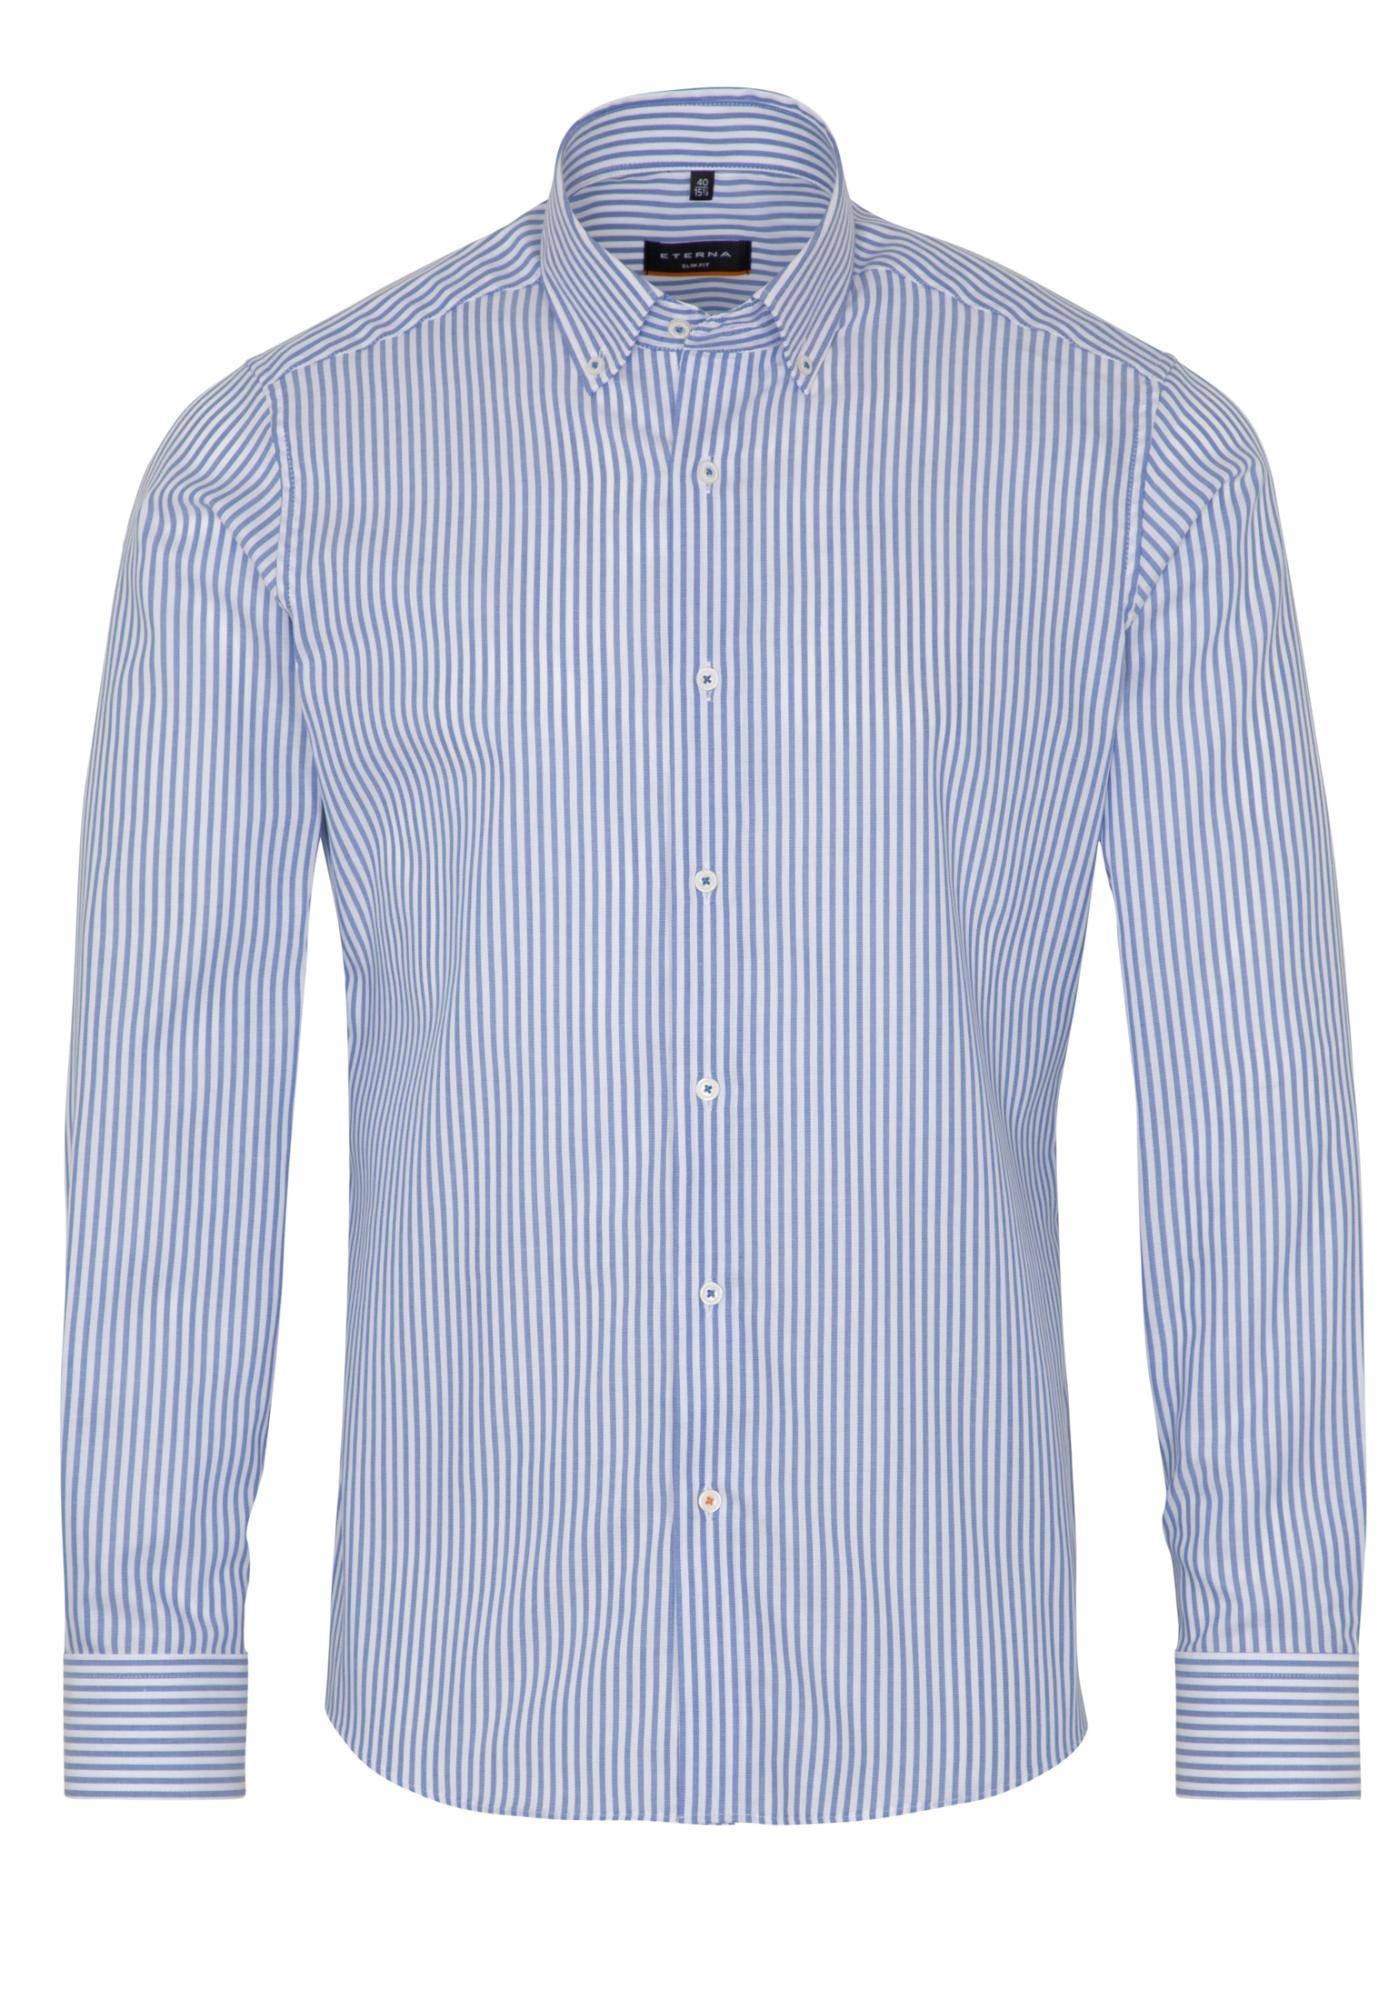 Мужская рубашка ETERNA, синяя, цвет синий, размер 44 - фото 1